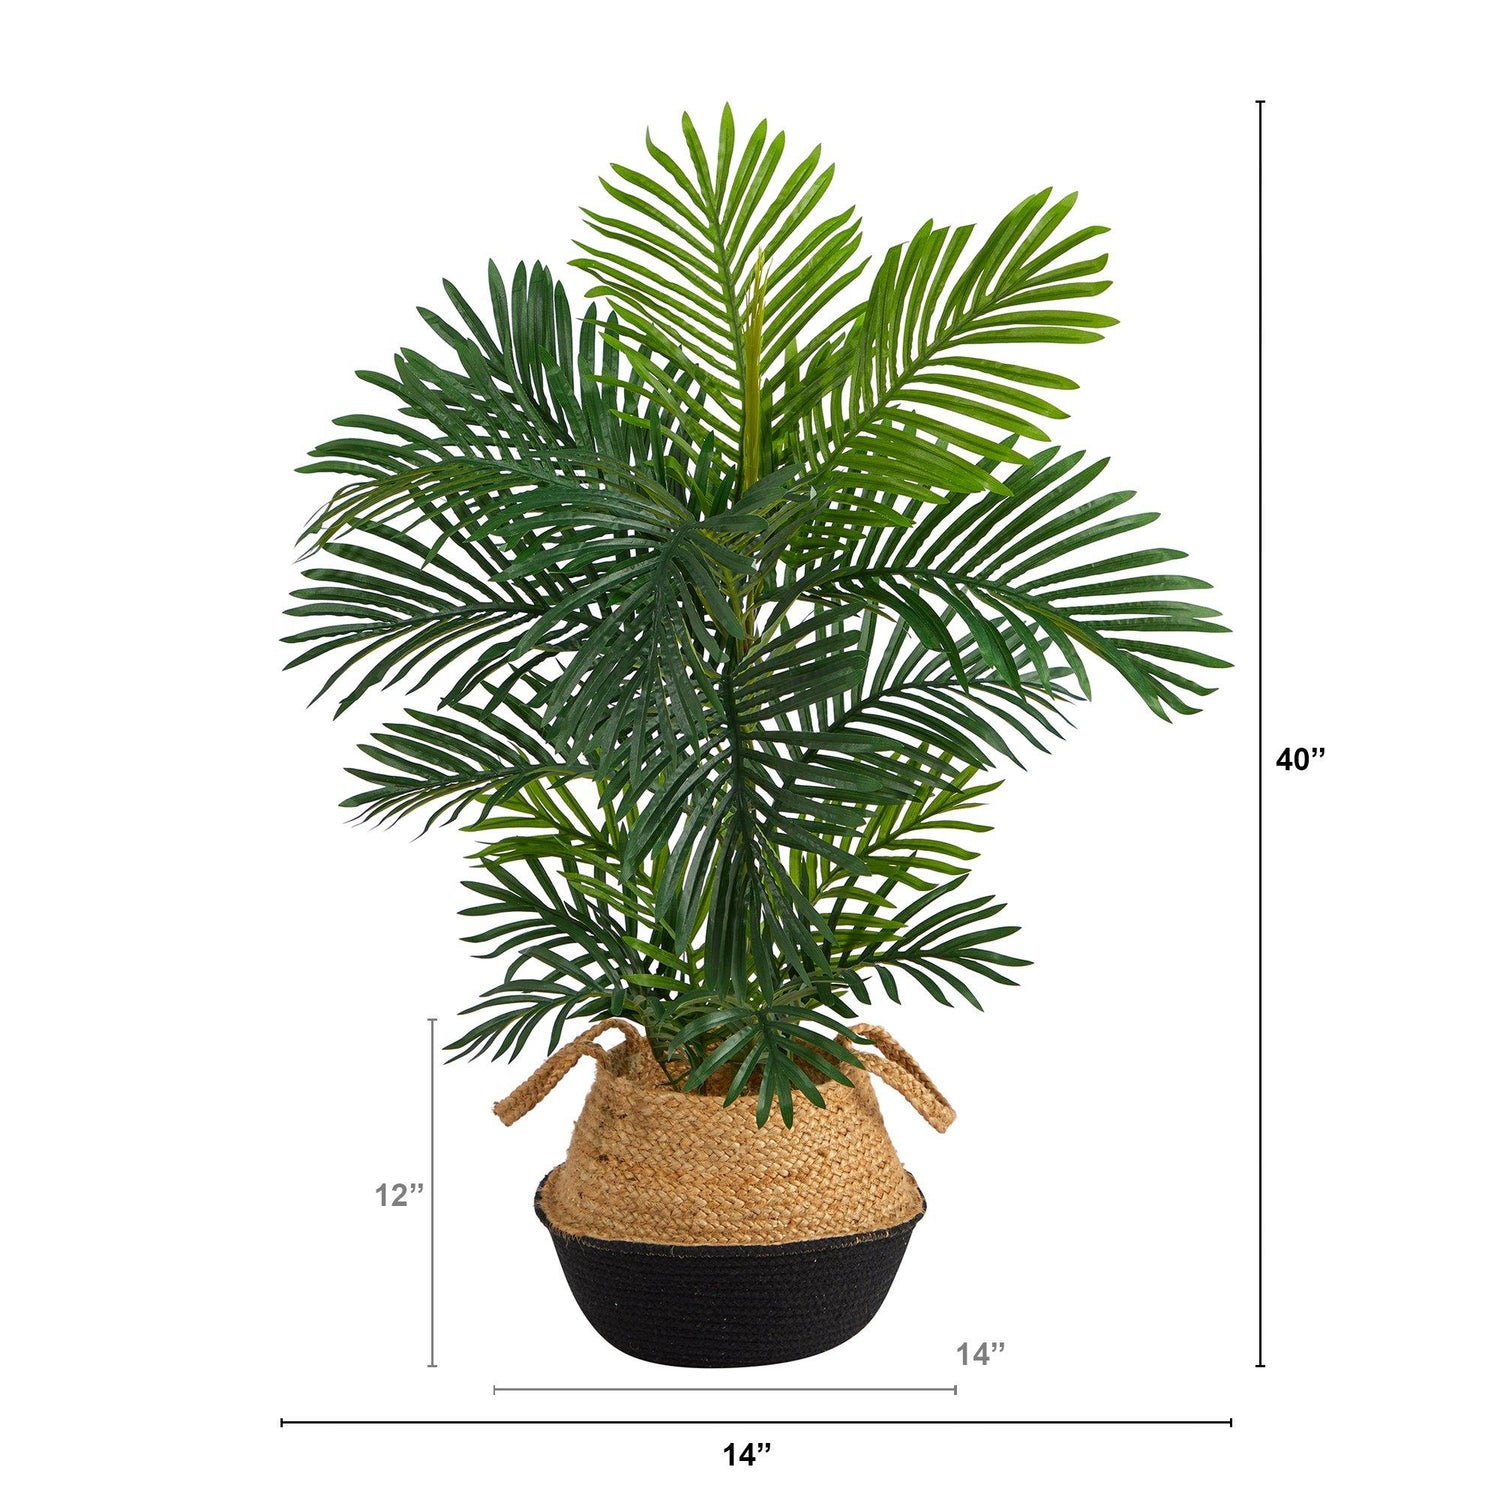 40” Areca Palm Tree in Boho Chic Handmade Cotton & Jute Black Woven Planter UV Resistant